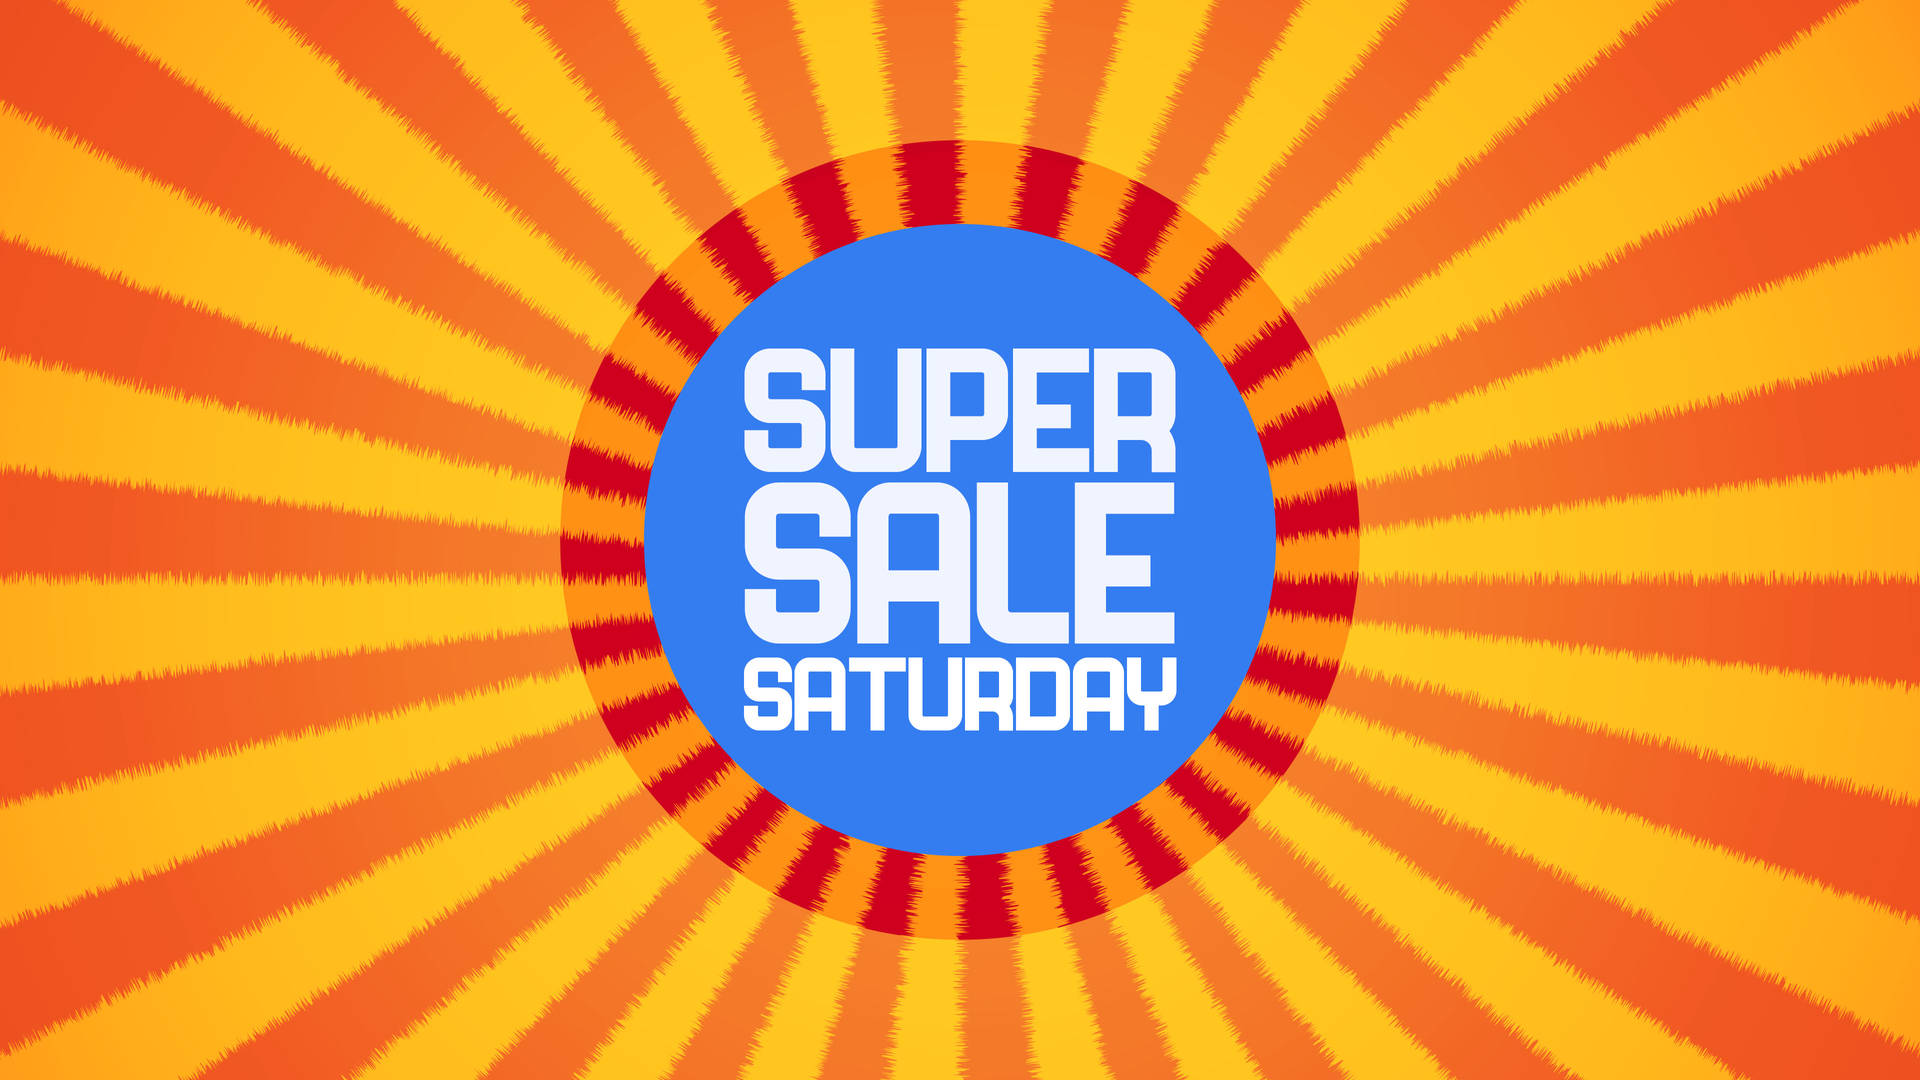 Super Saturday Sale With Sun Rays